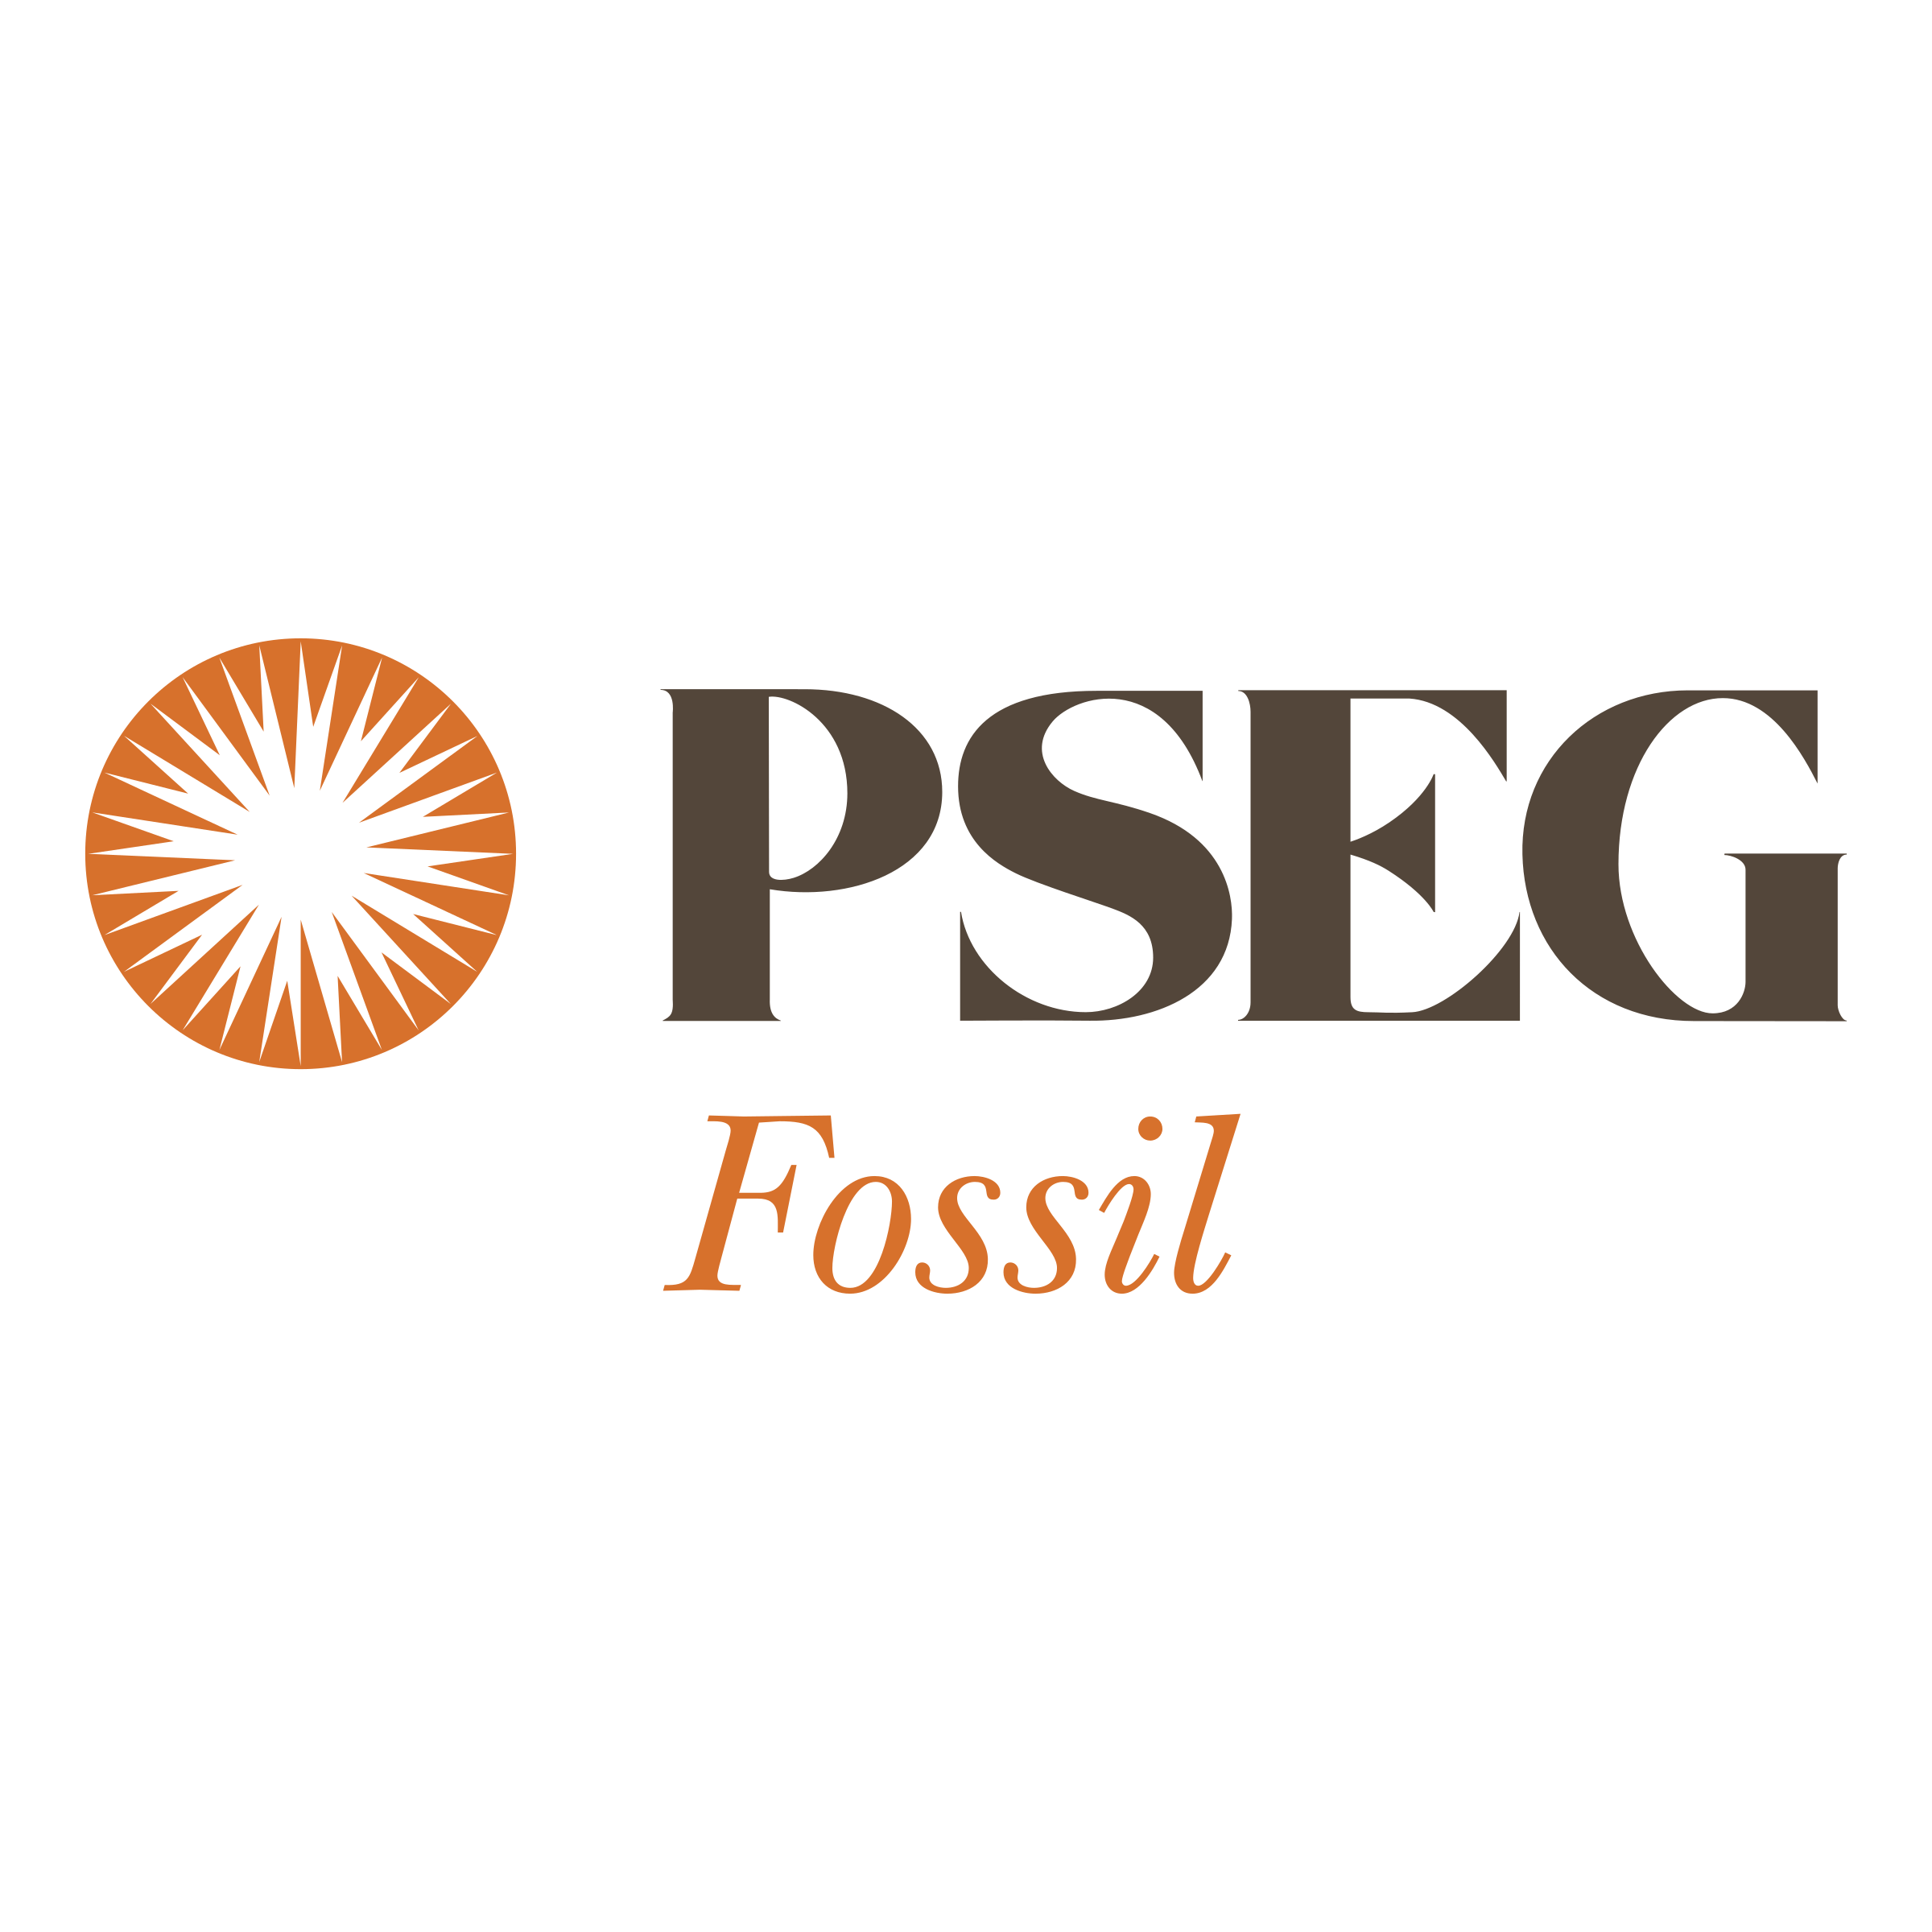 Fossil Logo - PSEG Fossil Logo PNG Transparent & SVG Vector